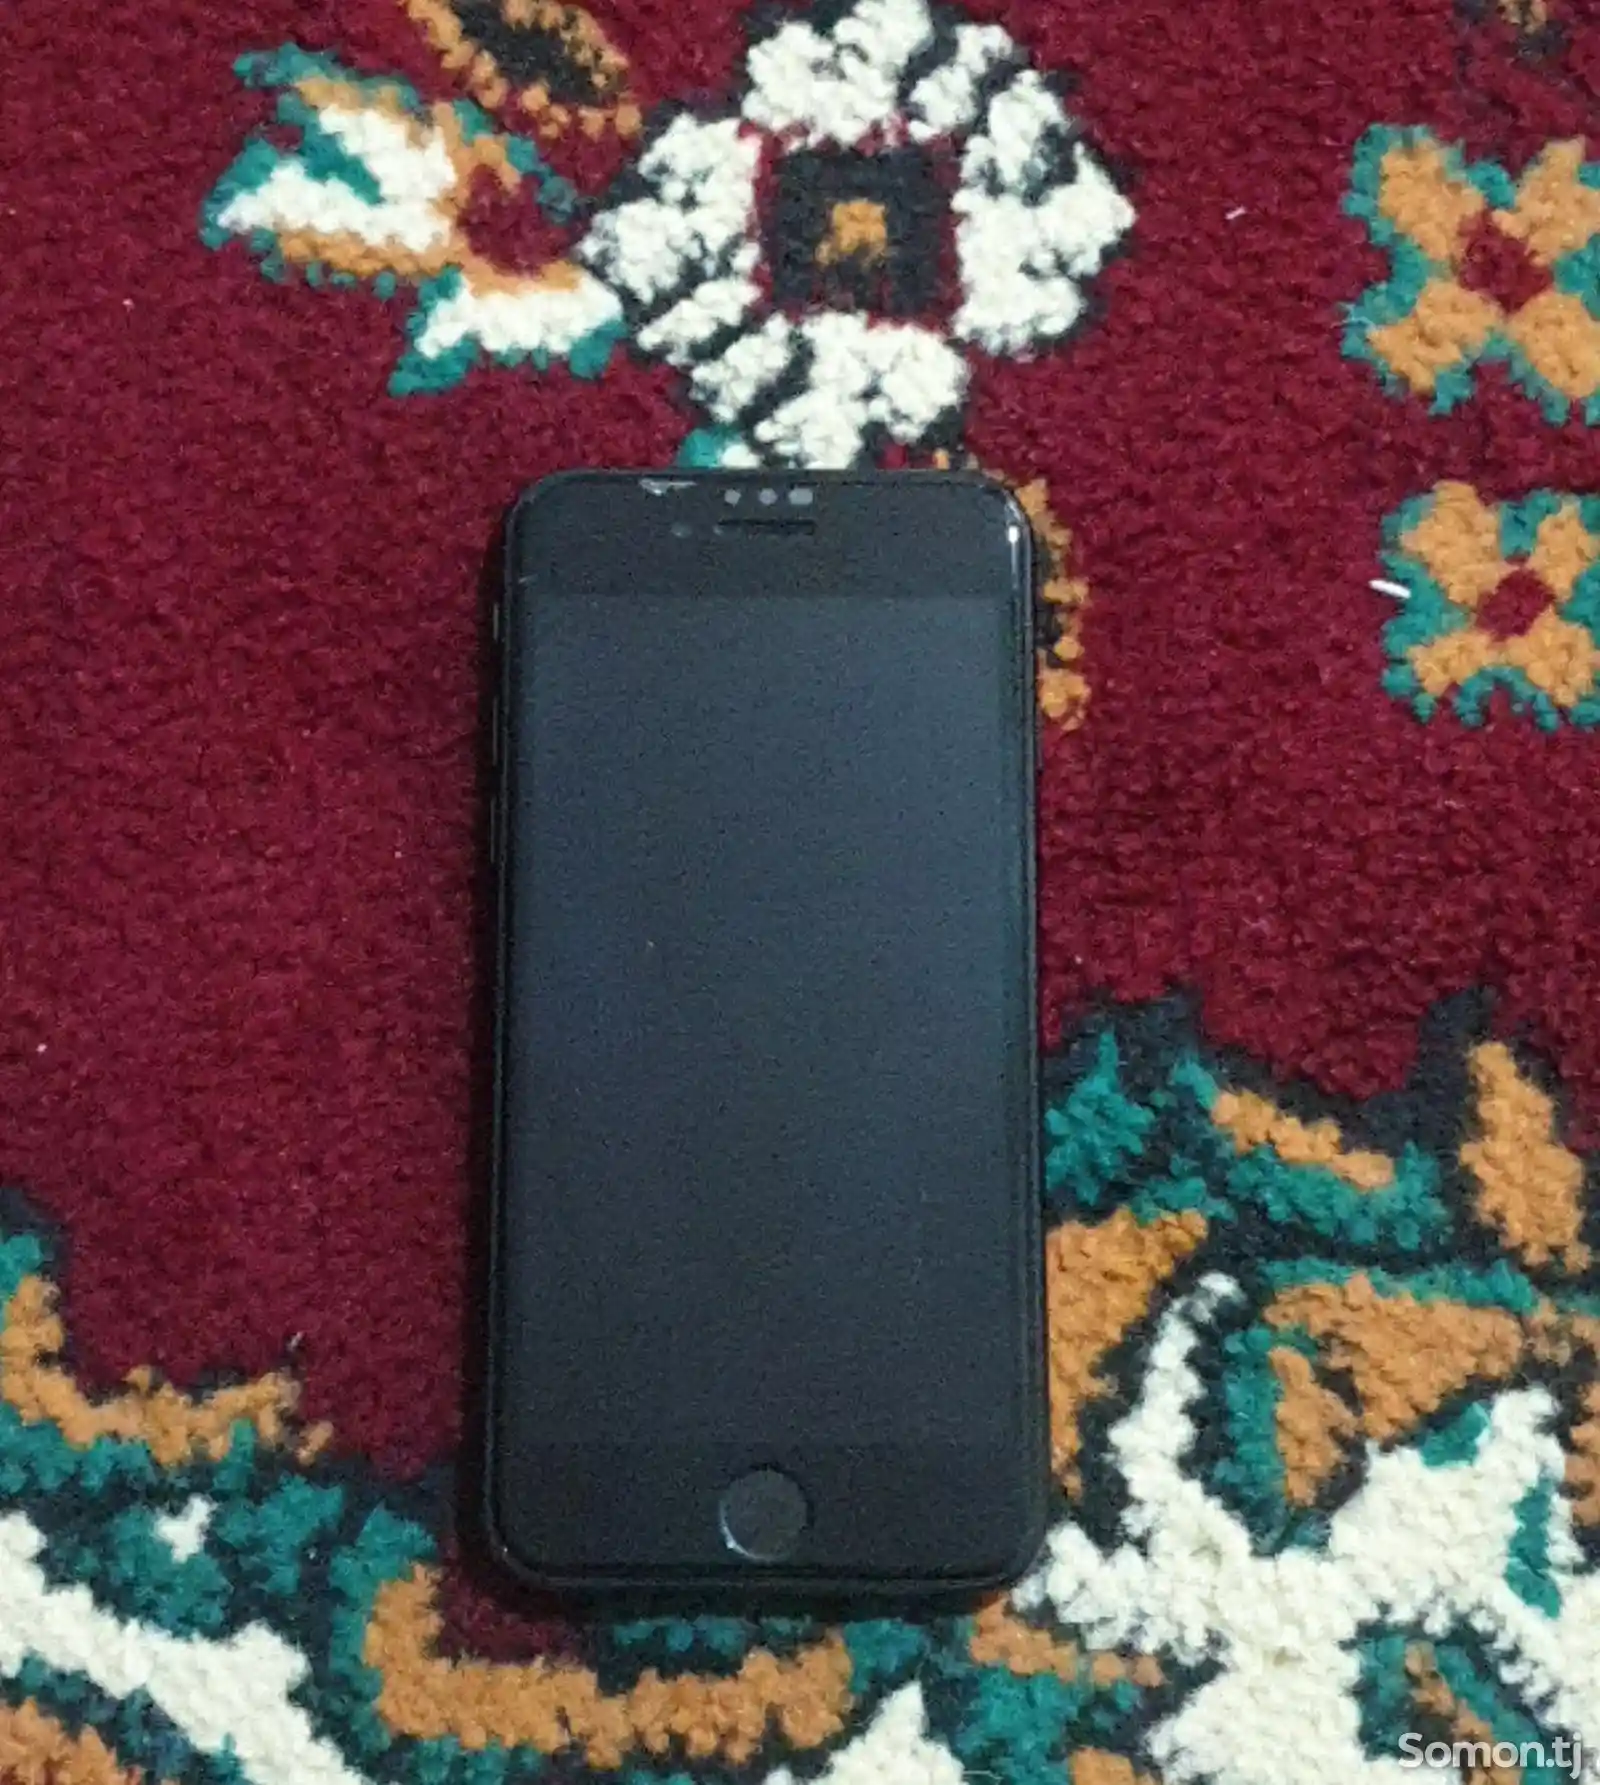 Apple iPhone SE, 64 gb-1